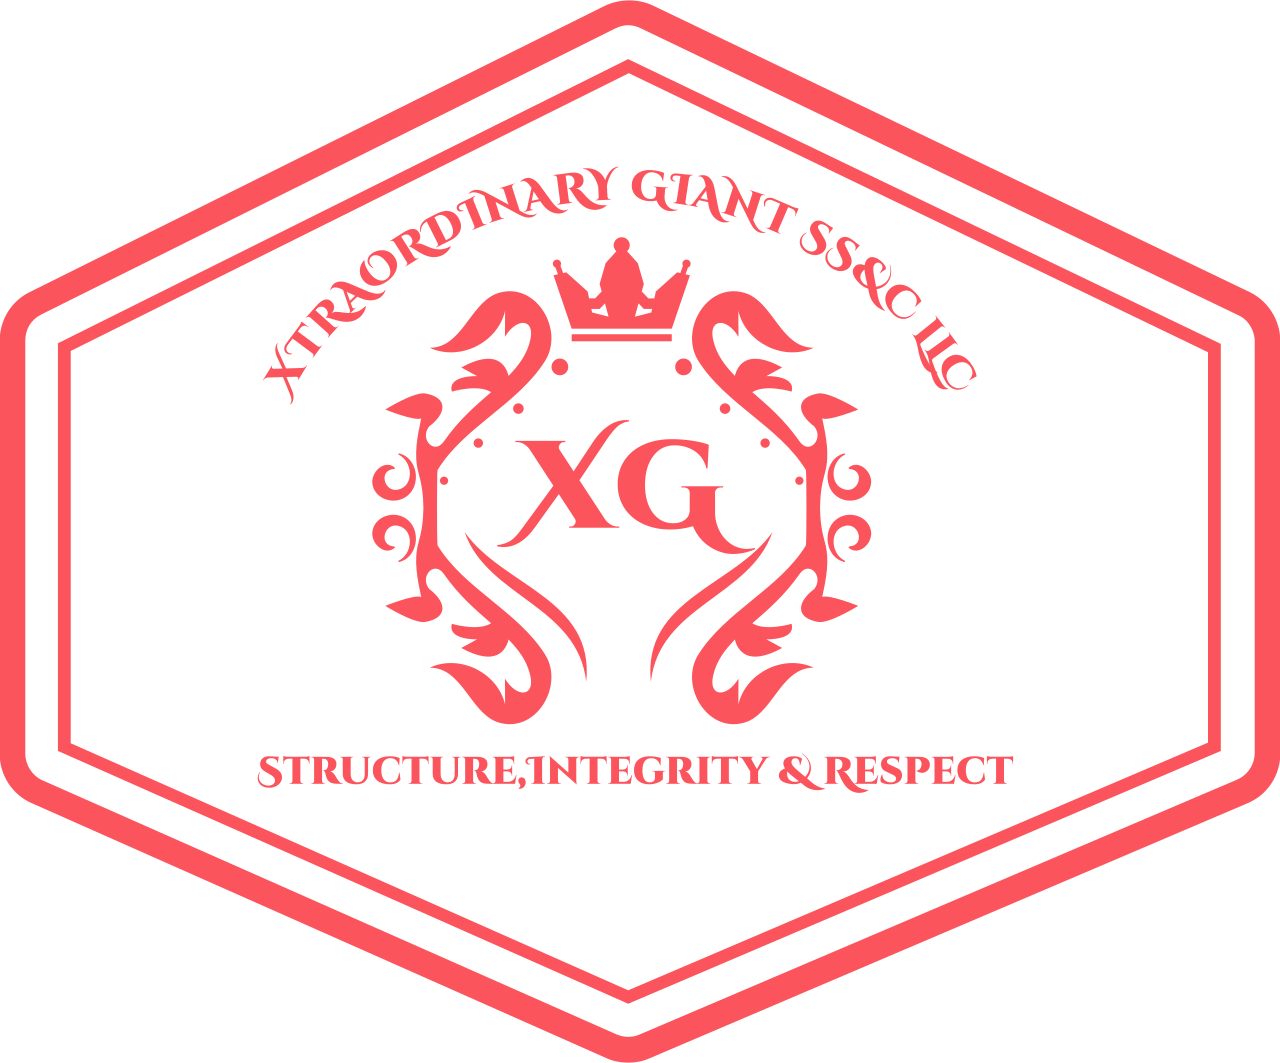 XTRAORDINARY GIANT SSC LLC's logo